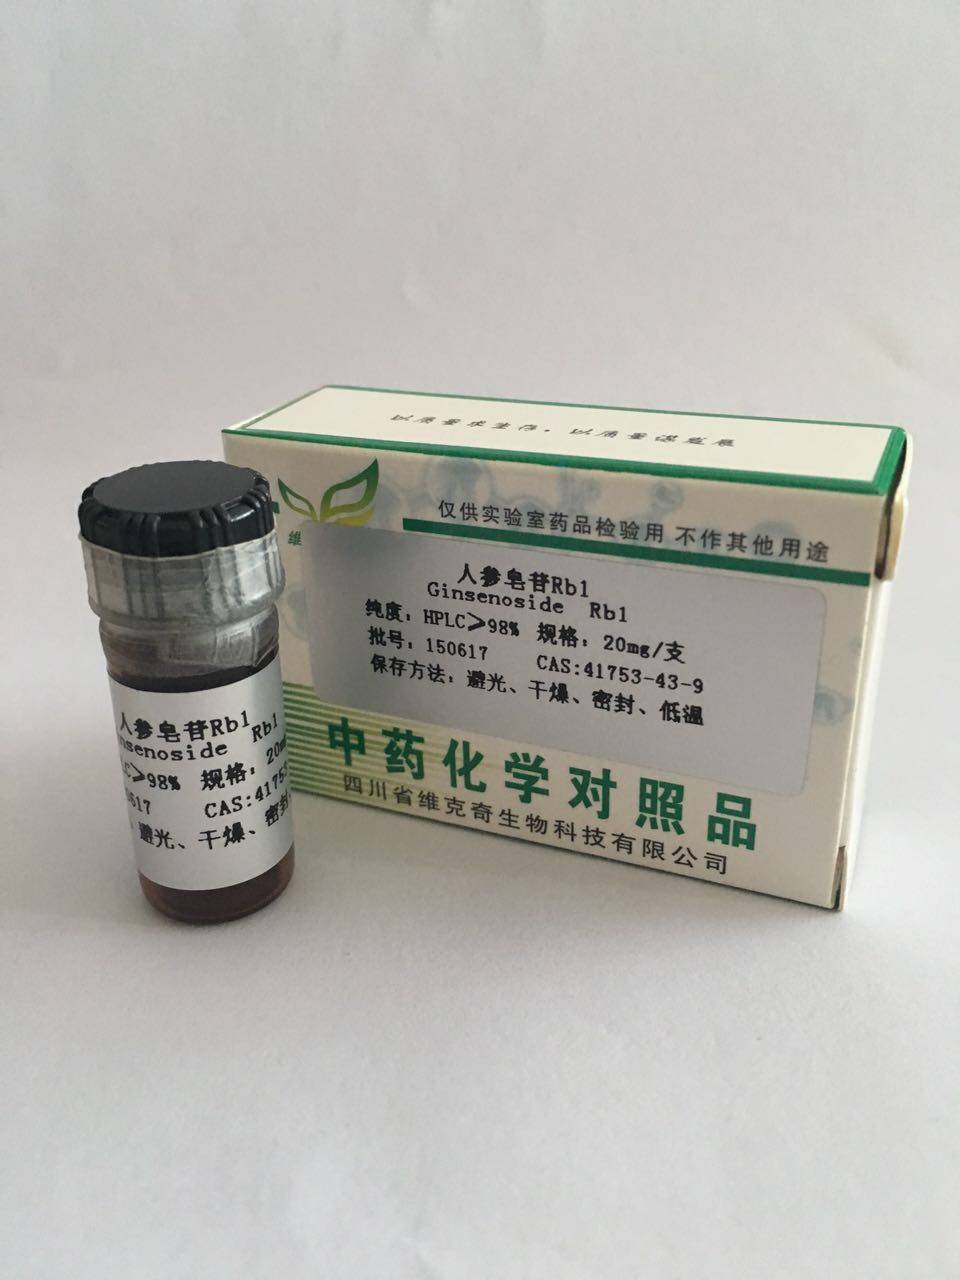 现货供应高纯人参皂苷Rb1、41753-43、Ginsenoside Rb1